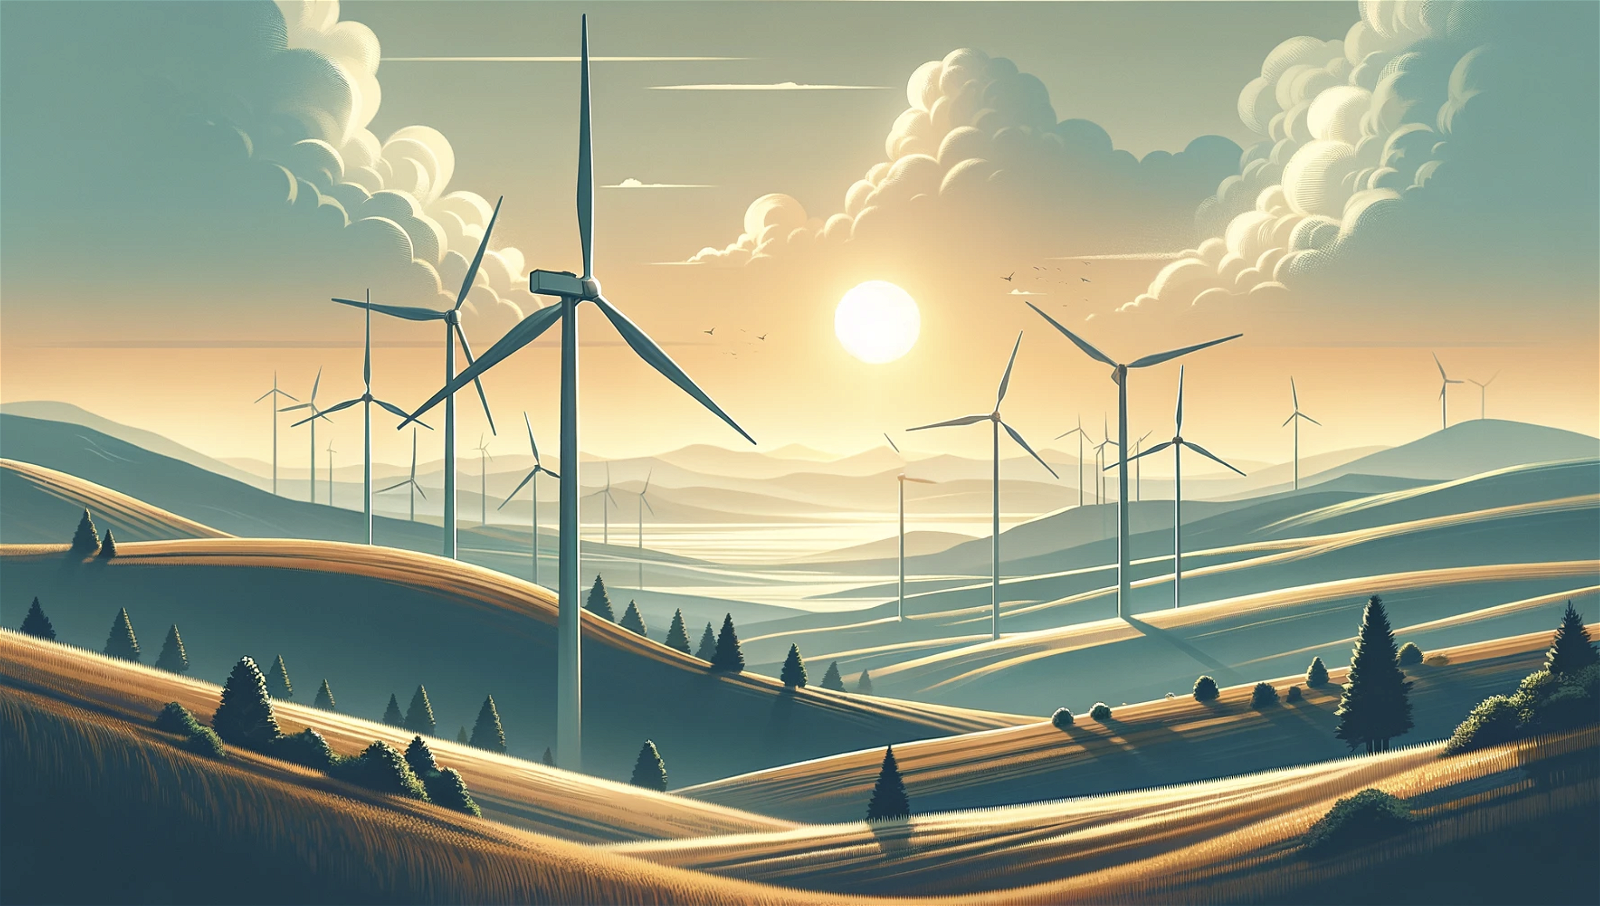 illustration of a wind farm landscape